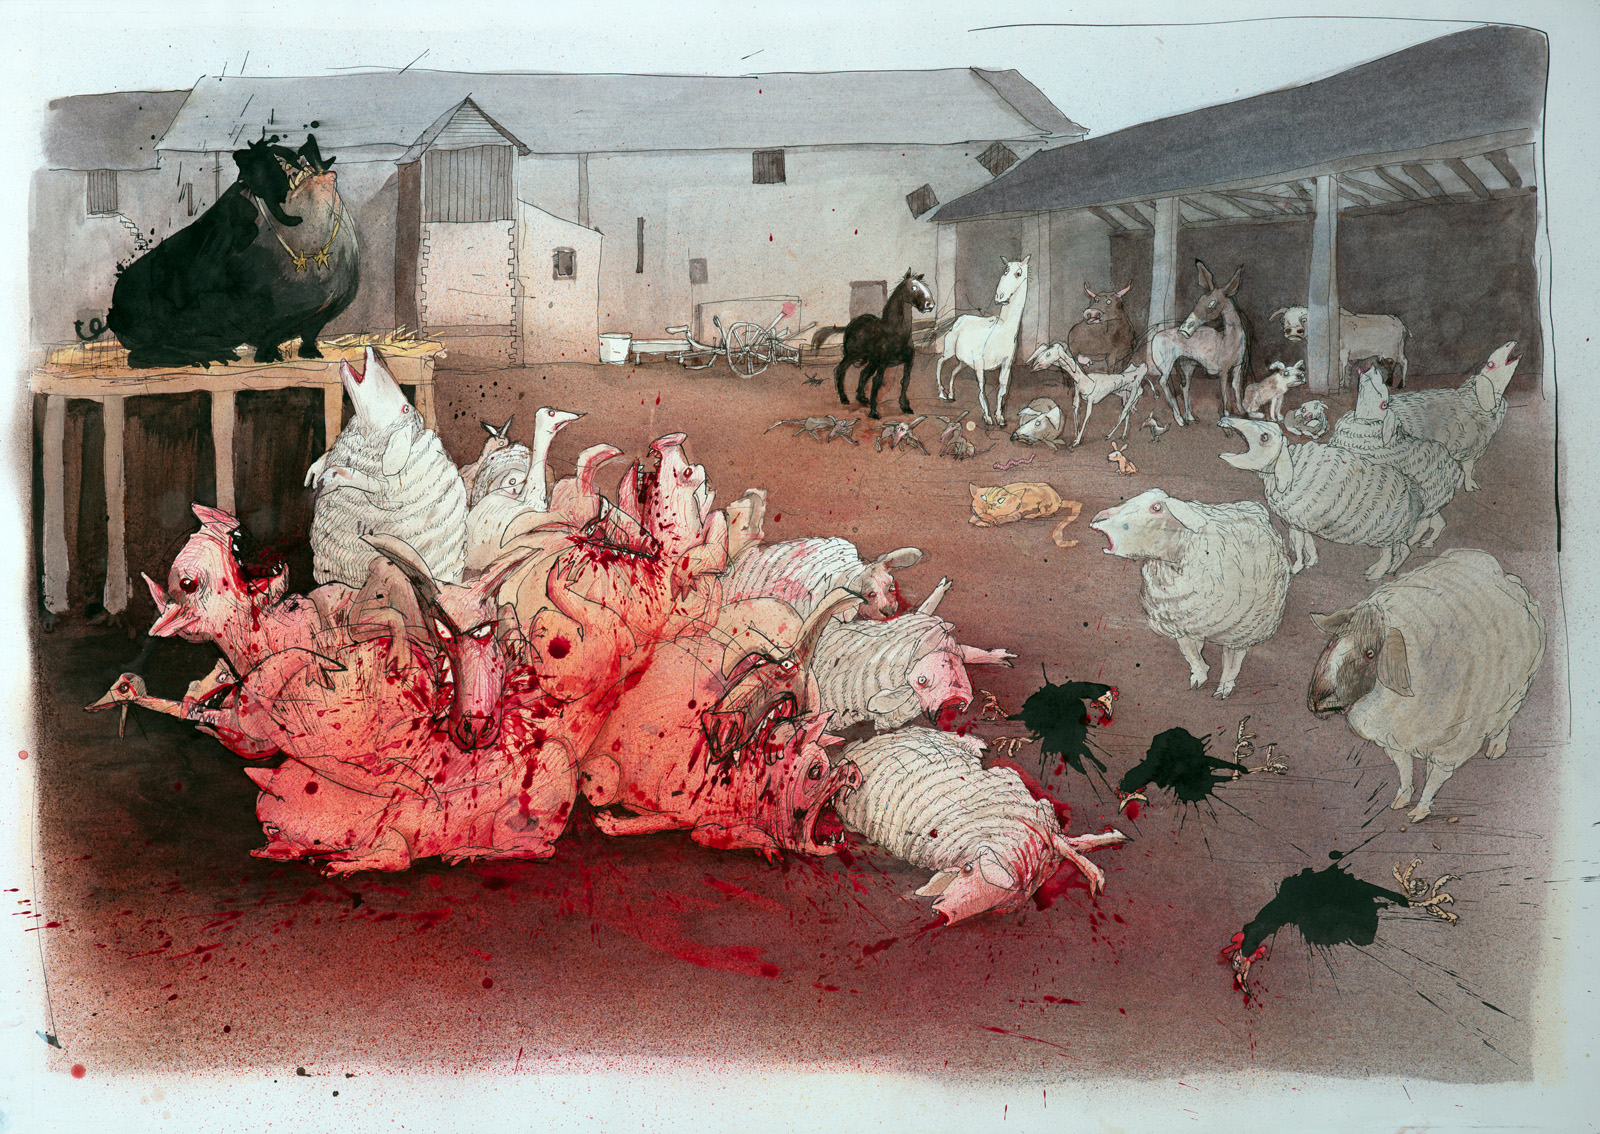 Illustration from Ralph Steadman's iversion of George Orwell's Animal Farm